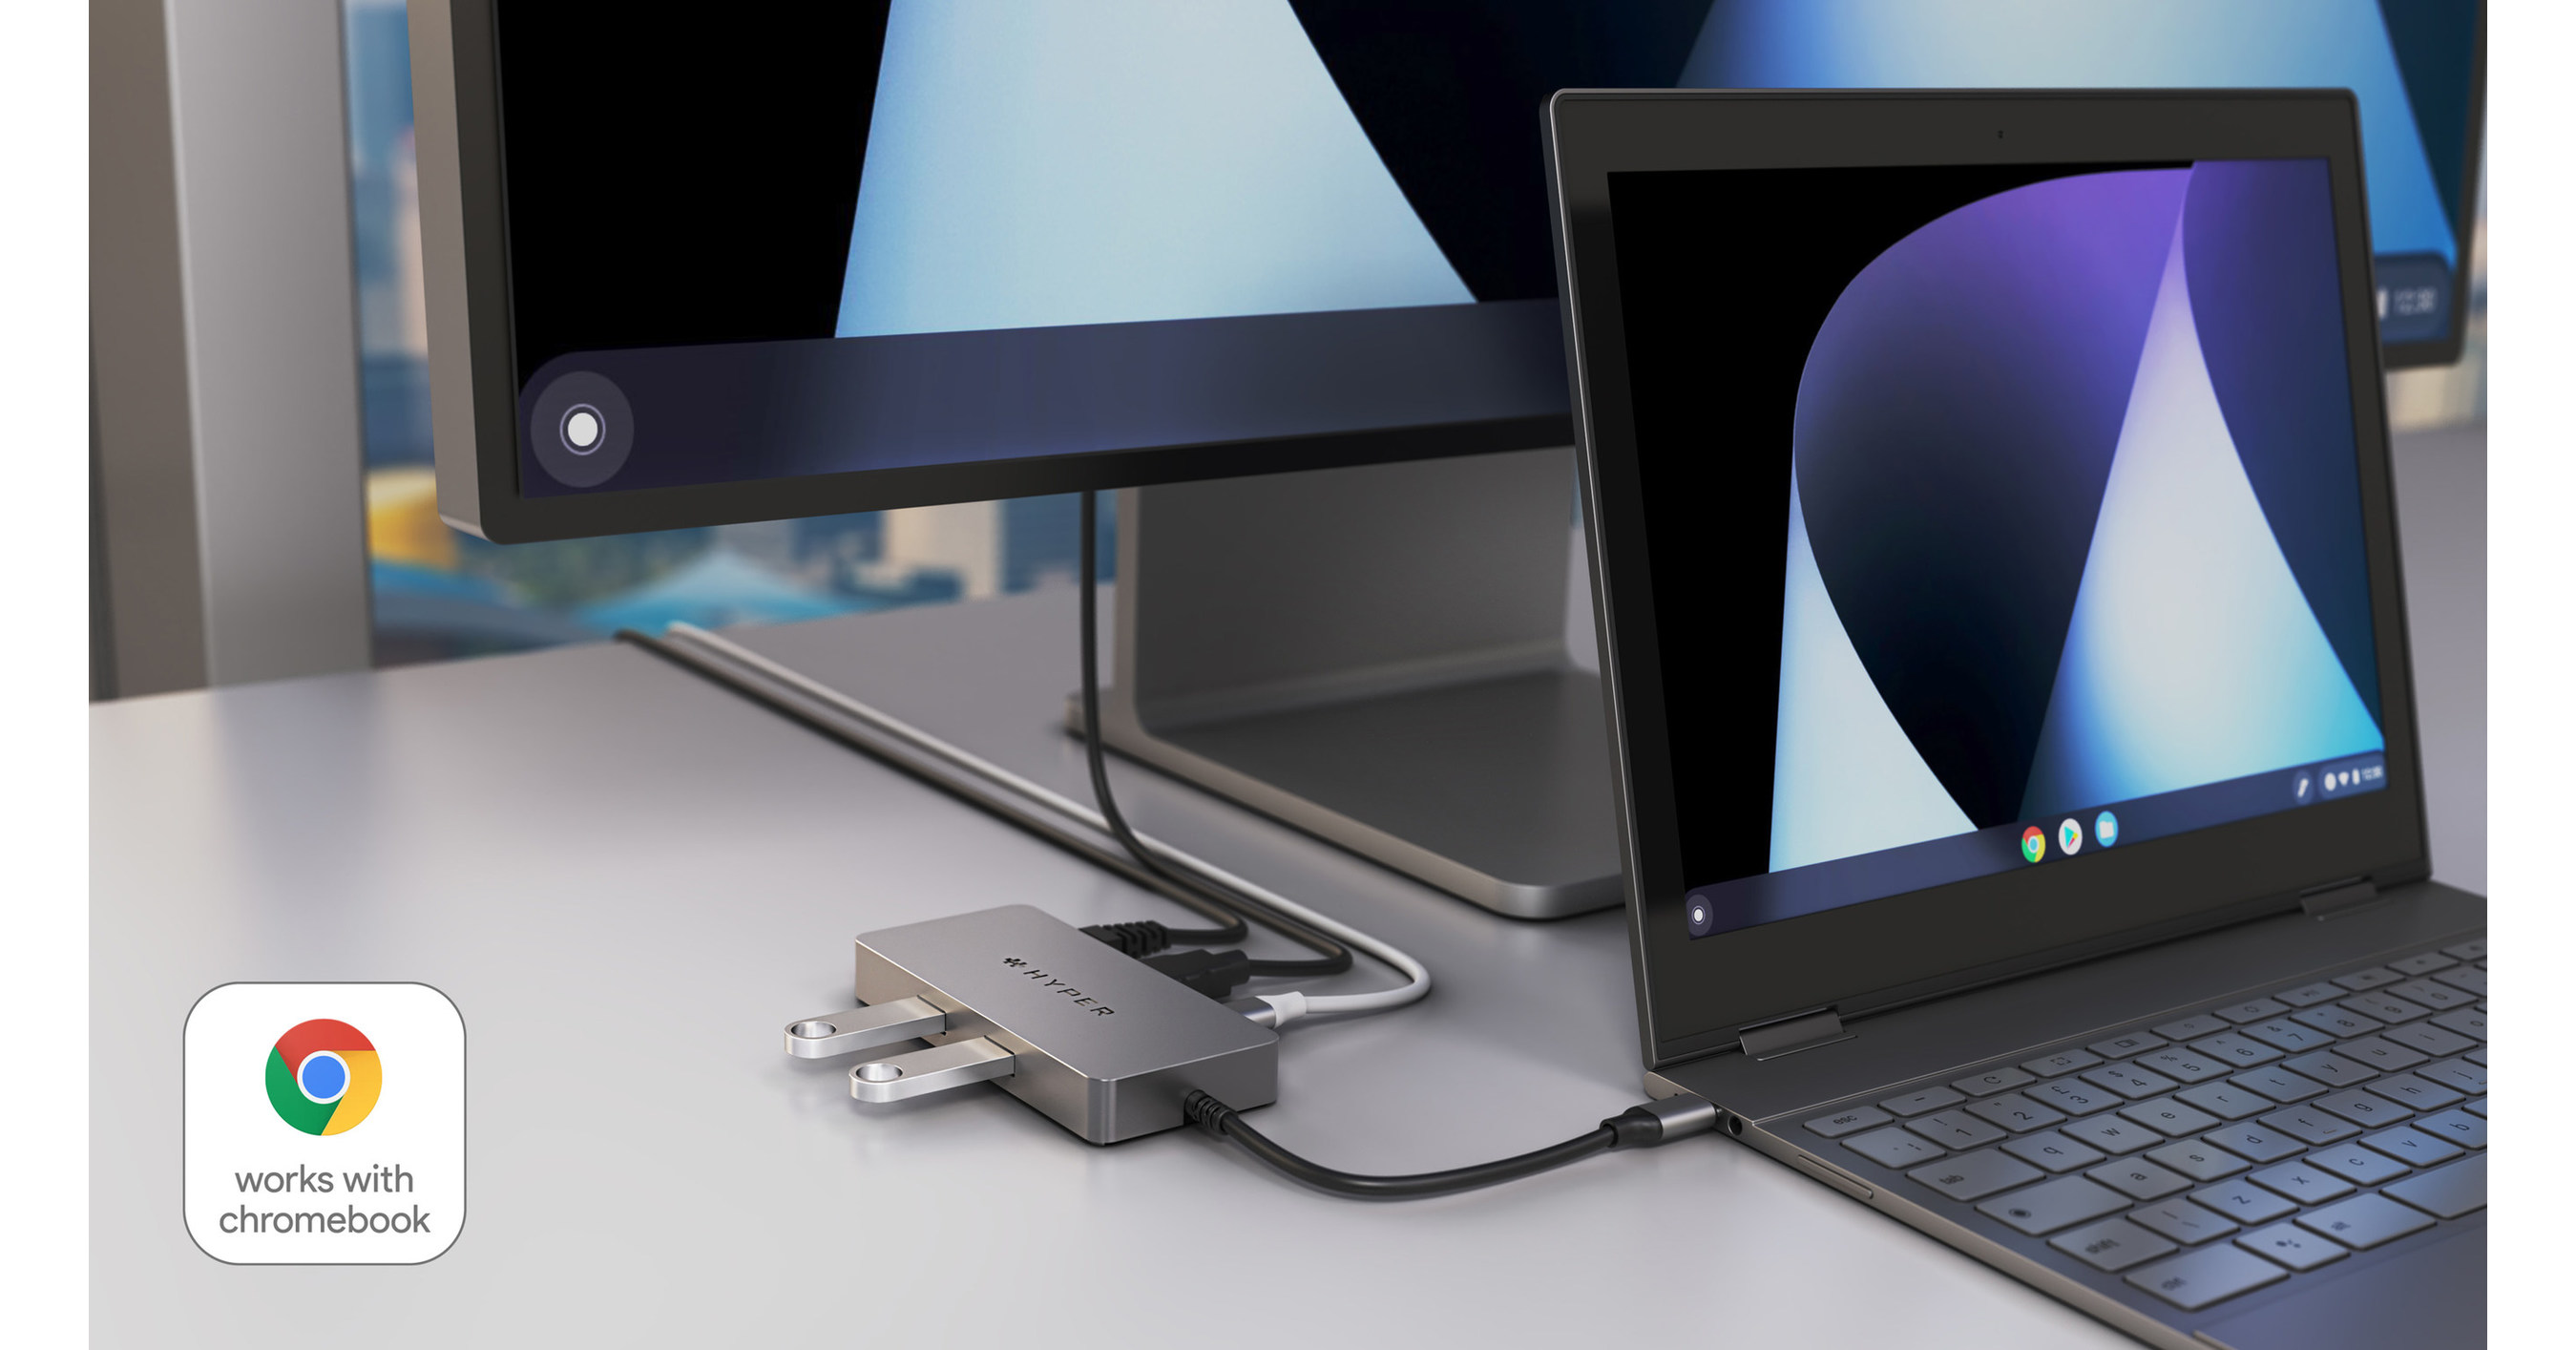 HyperDrive 14-Port USB-C Docking Station –